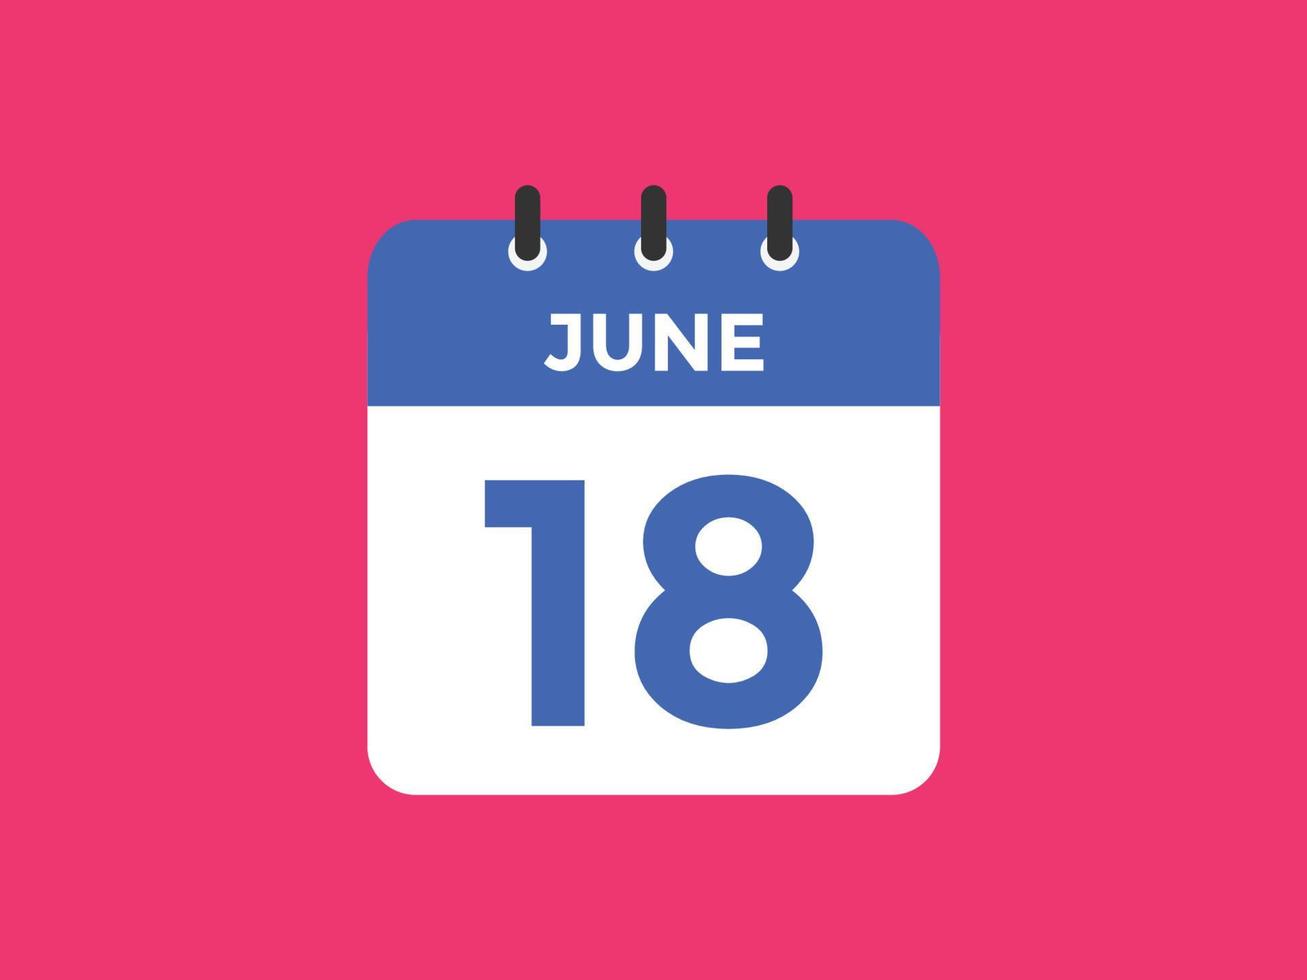 juni 18 kalender påminnelse. 18: e juni dagligen kalender ikon mall. kalender 18: e juni ikon design mall. vektor illustration